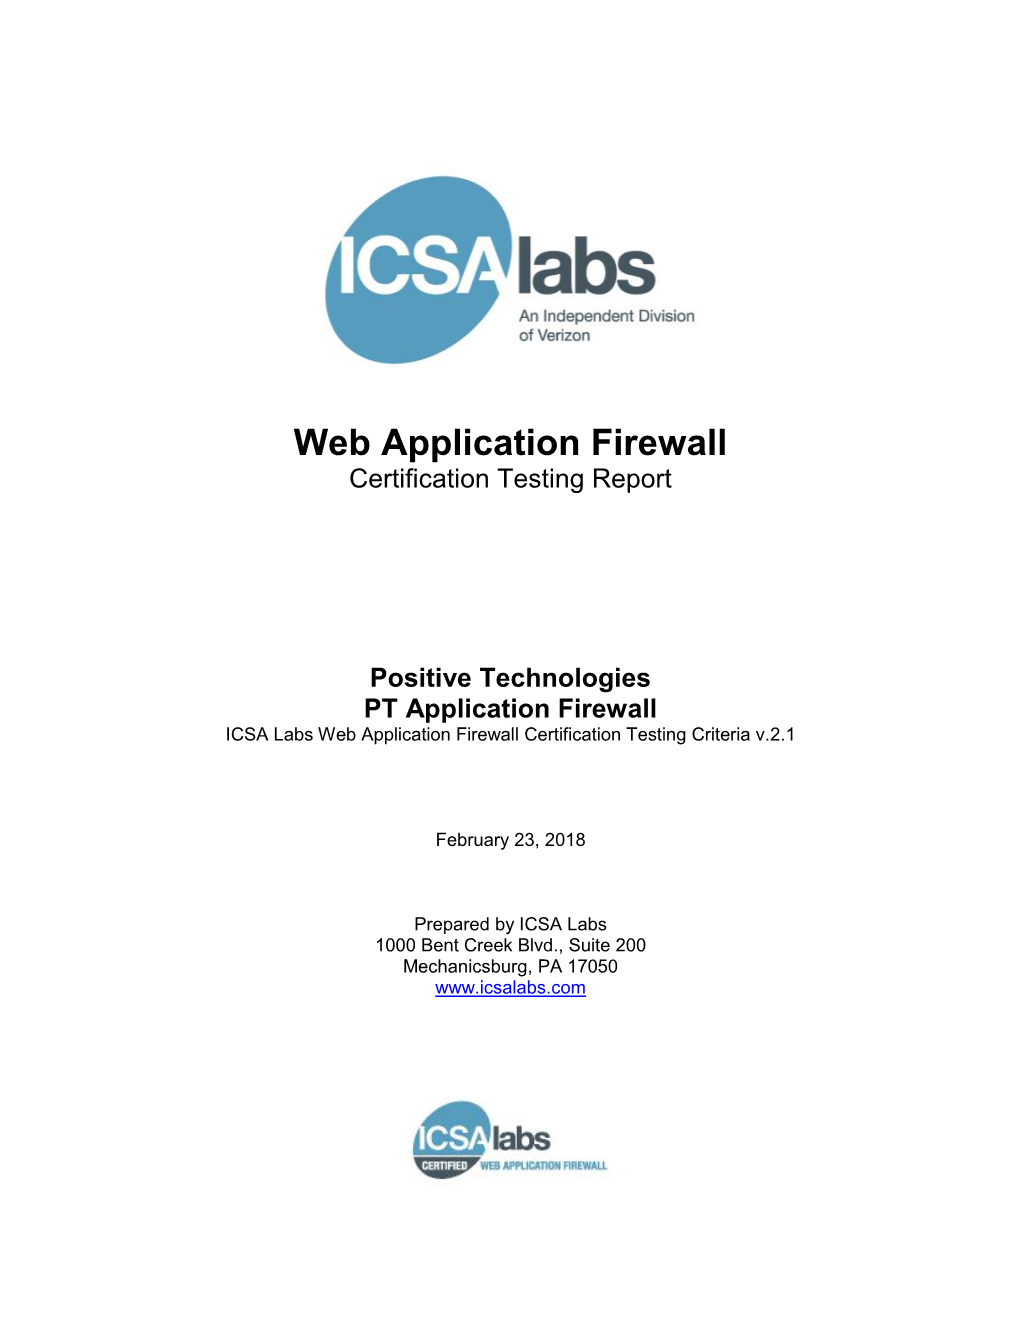 ICSA Labs Web Application Firewall Certification Testing Criteria V.2.1